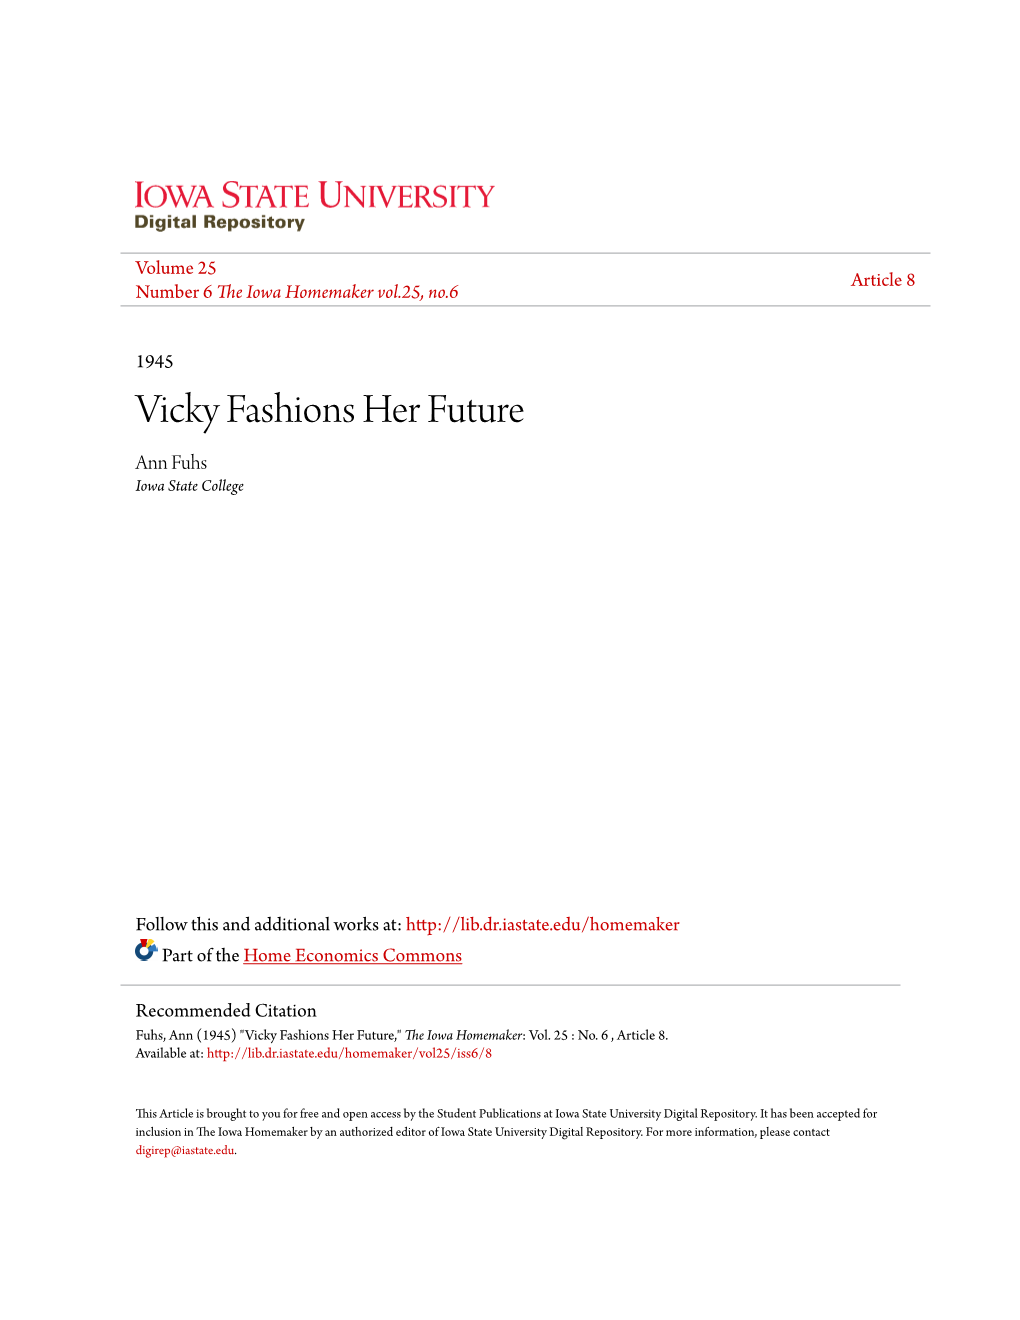 Vicky Fashions Her Future Ann Fuhs Iowa State College